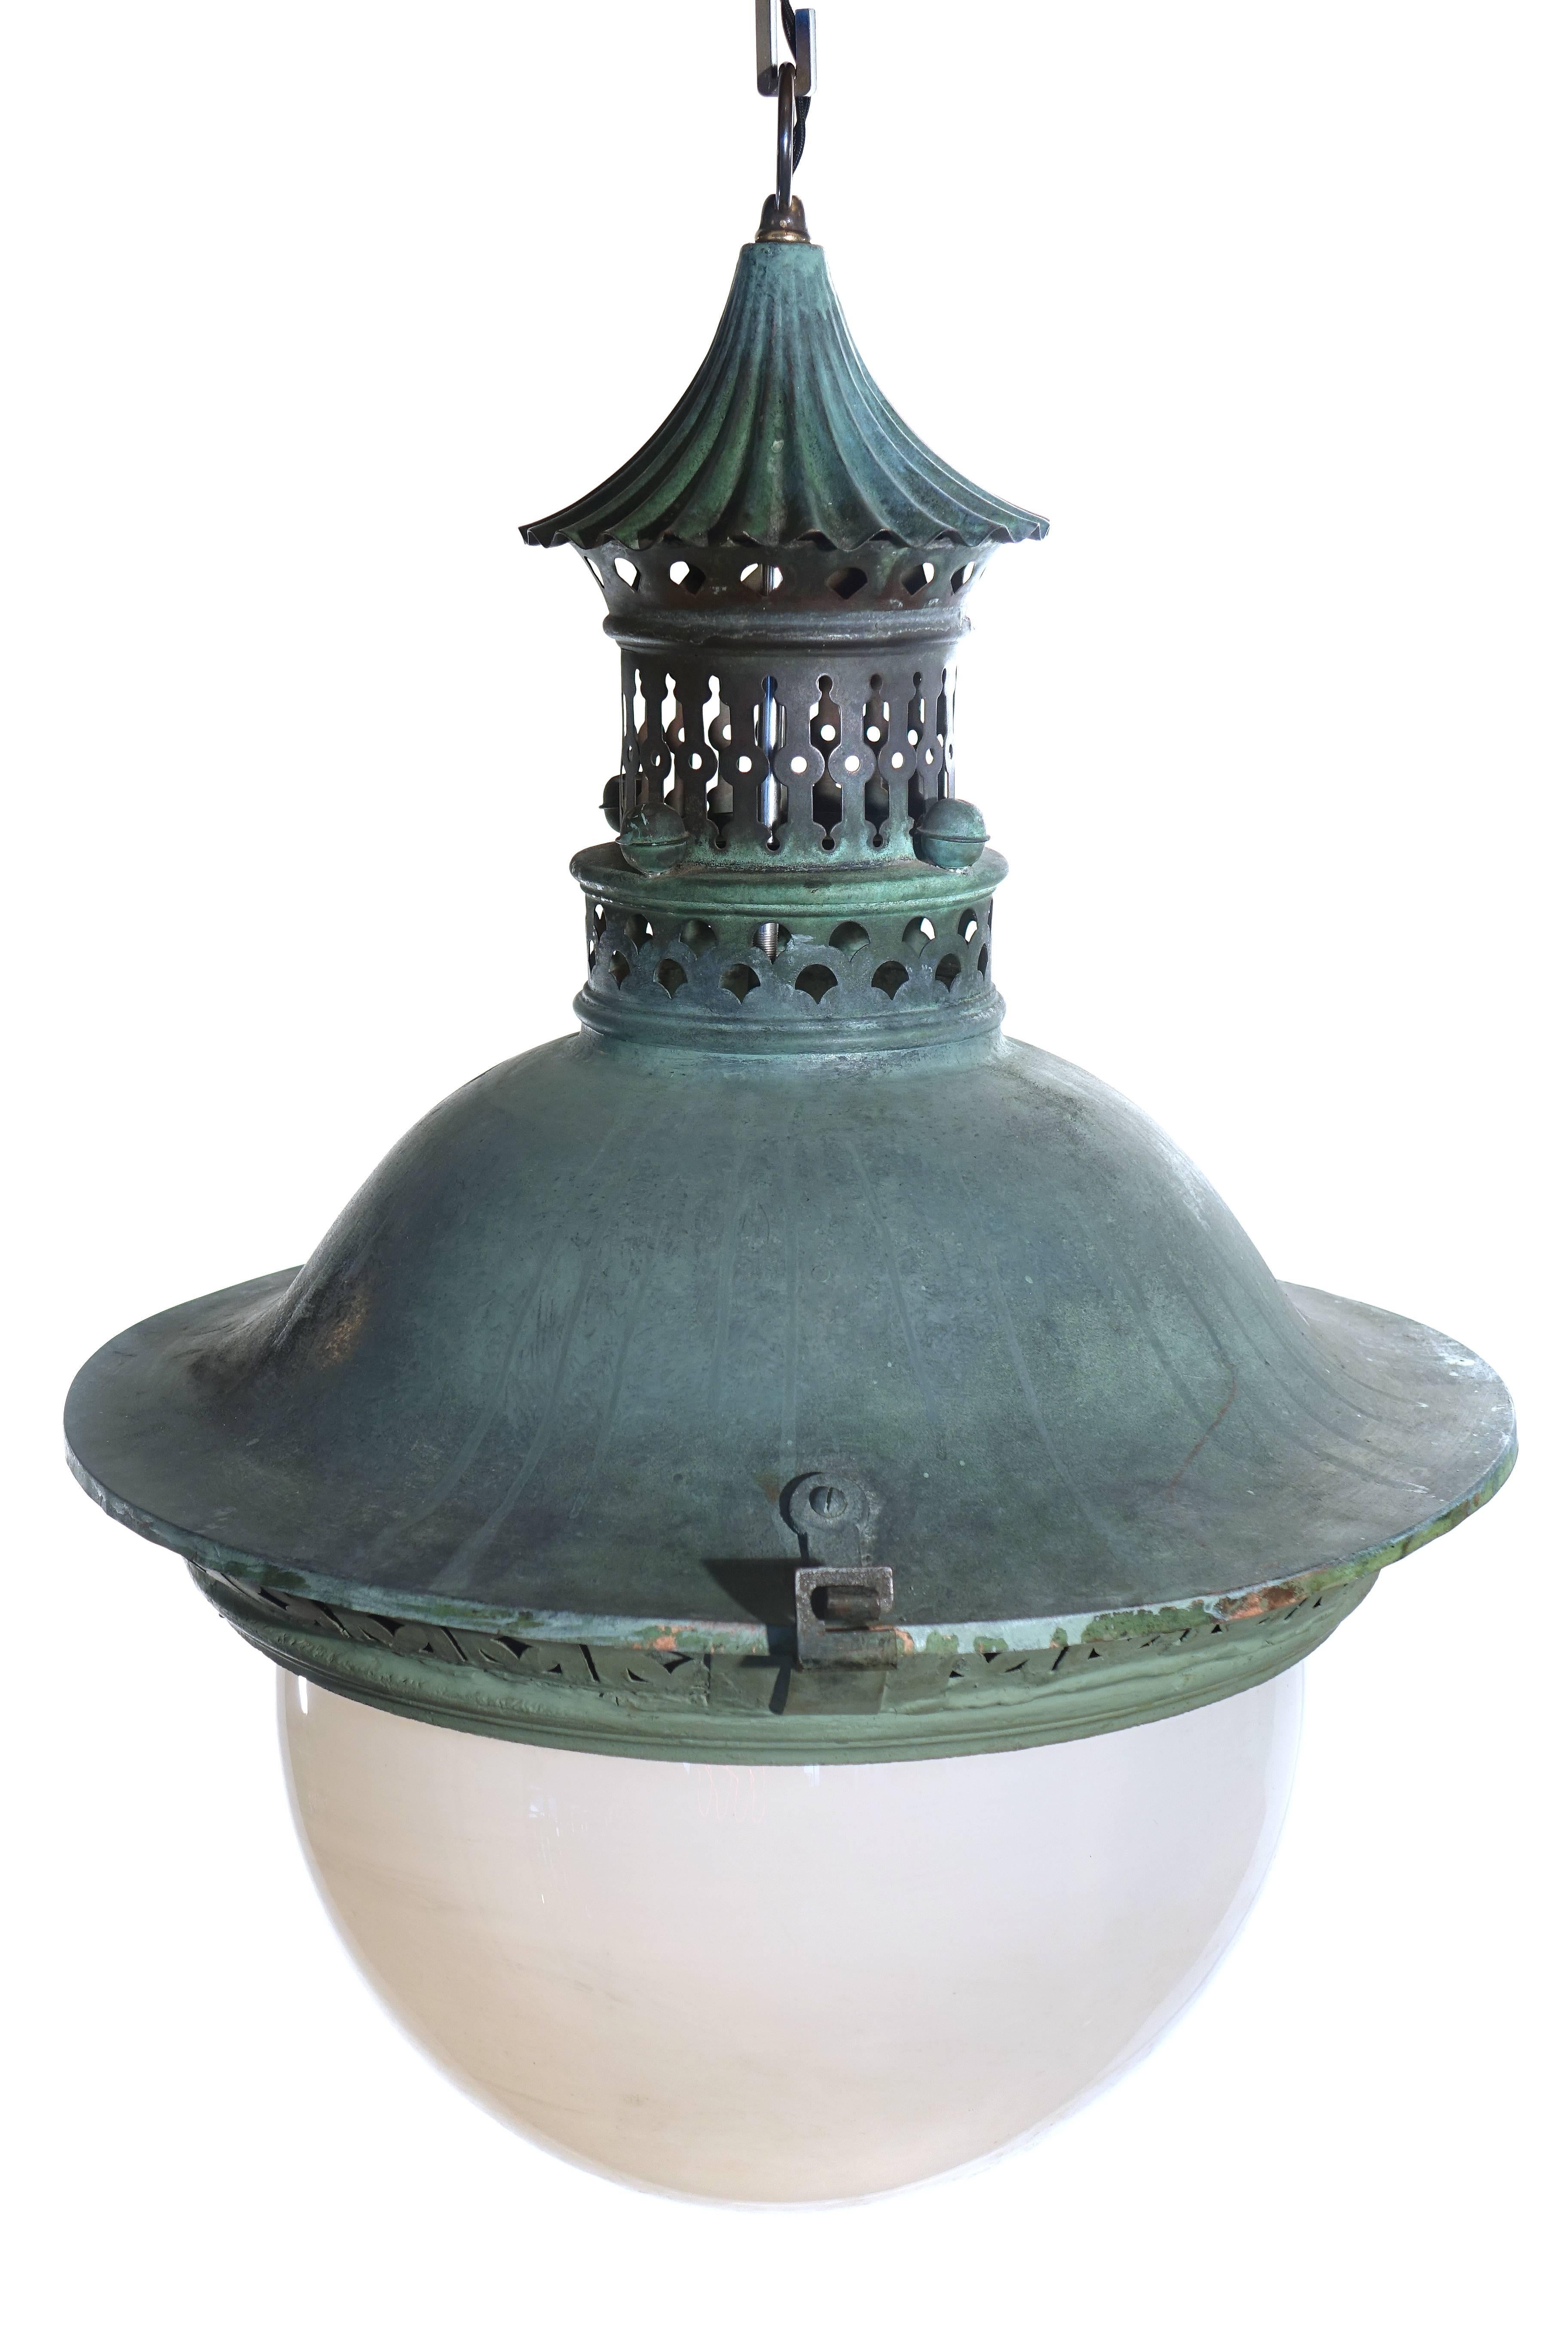 Beaux Arts Ornate Copper 19th Century European Street Lamp